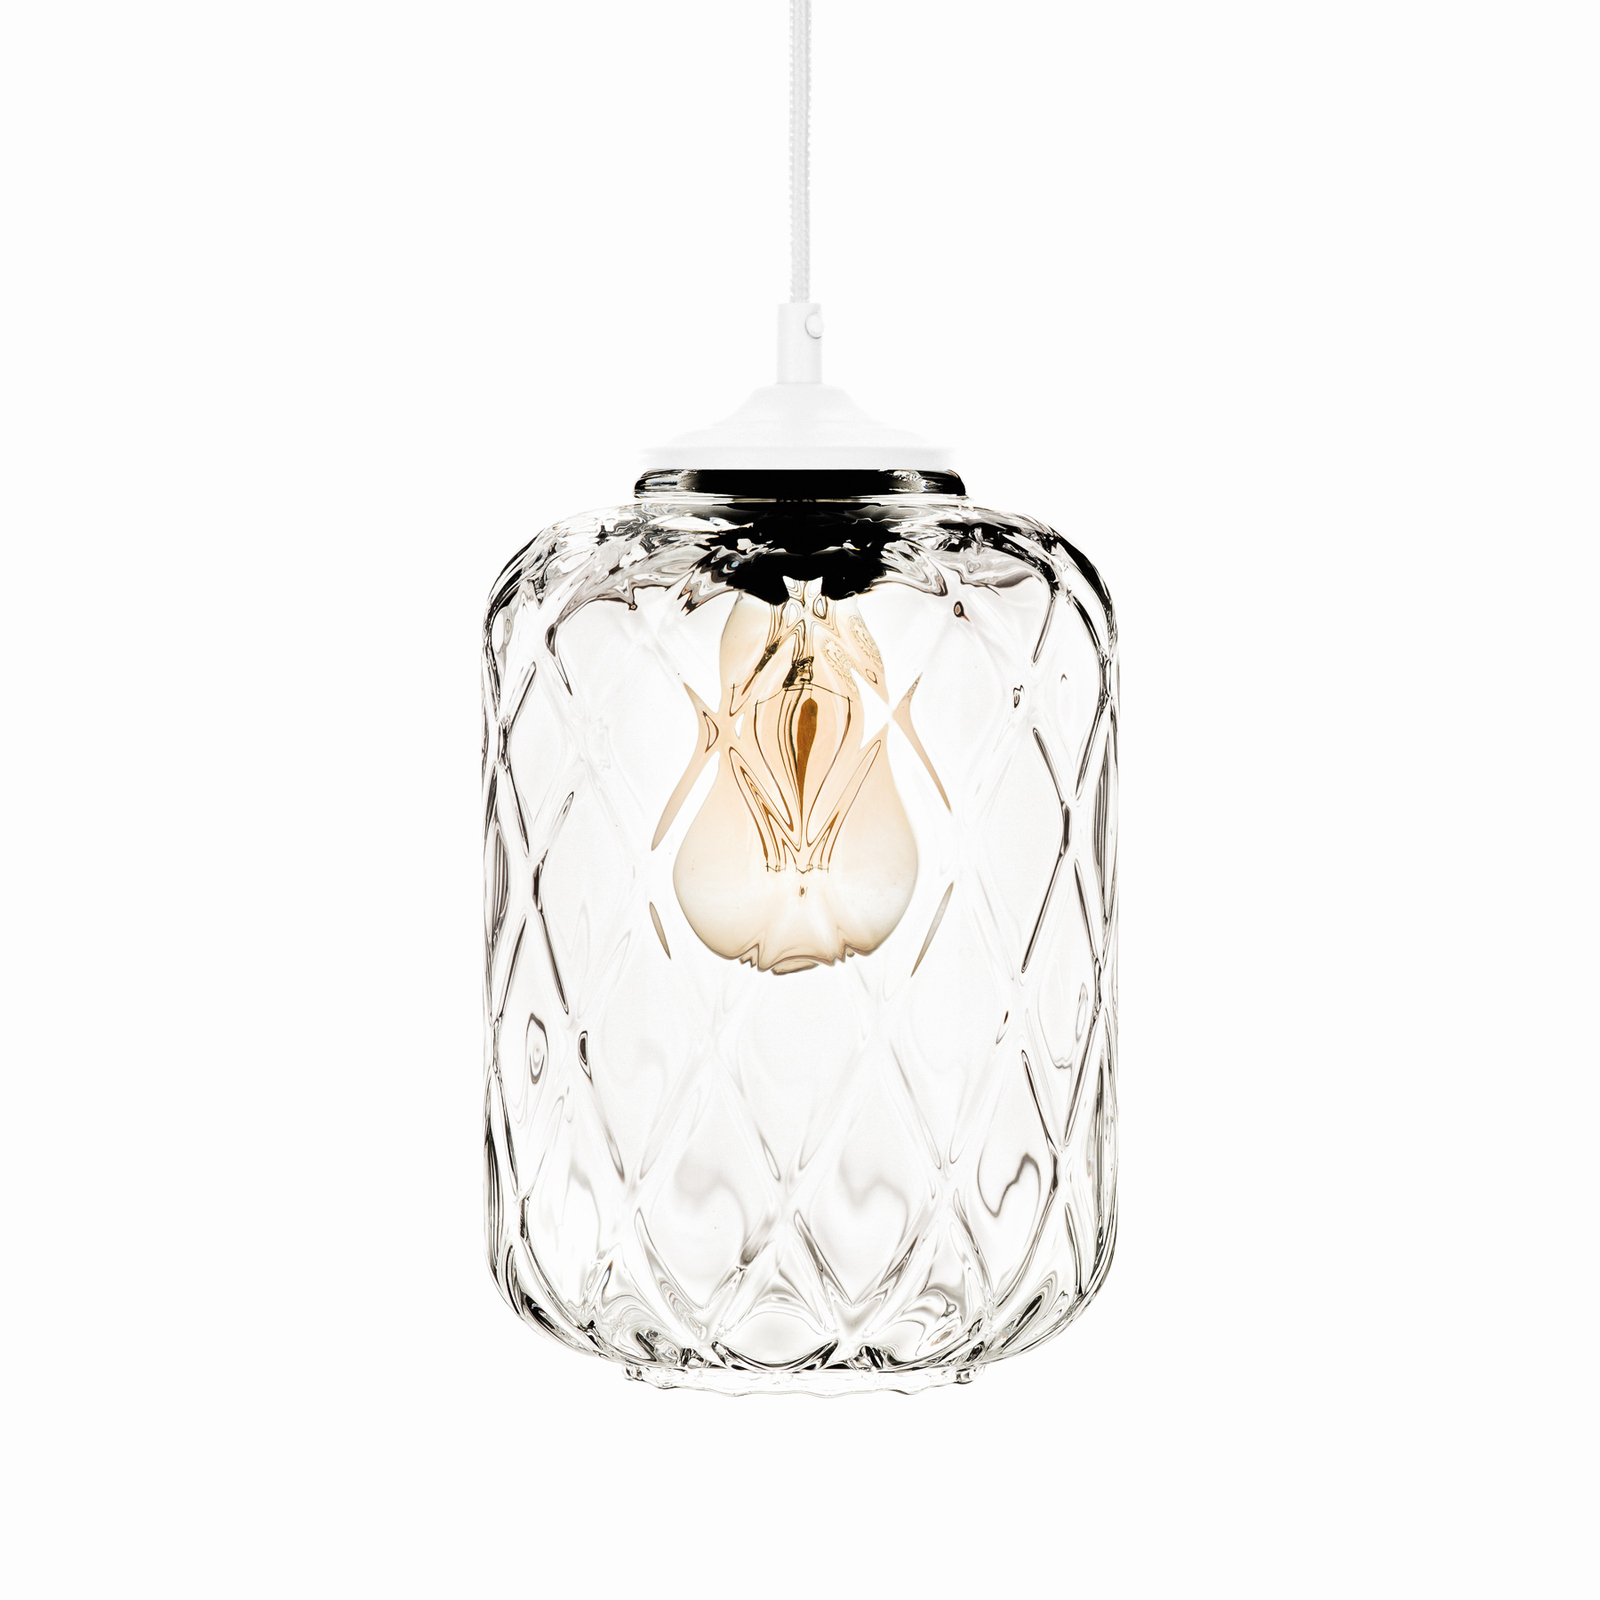 Tezeusz pendant light with clear glass shade Ø 17cm